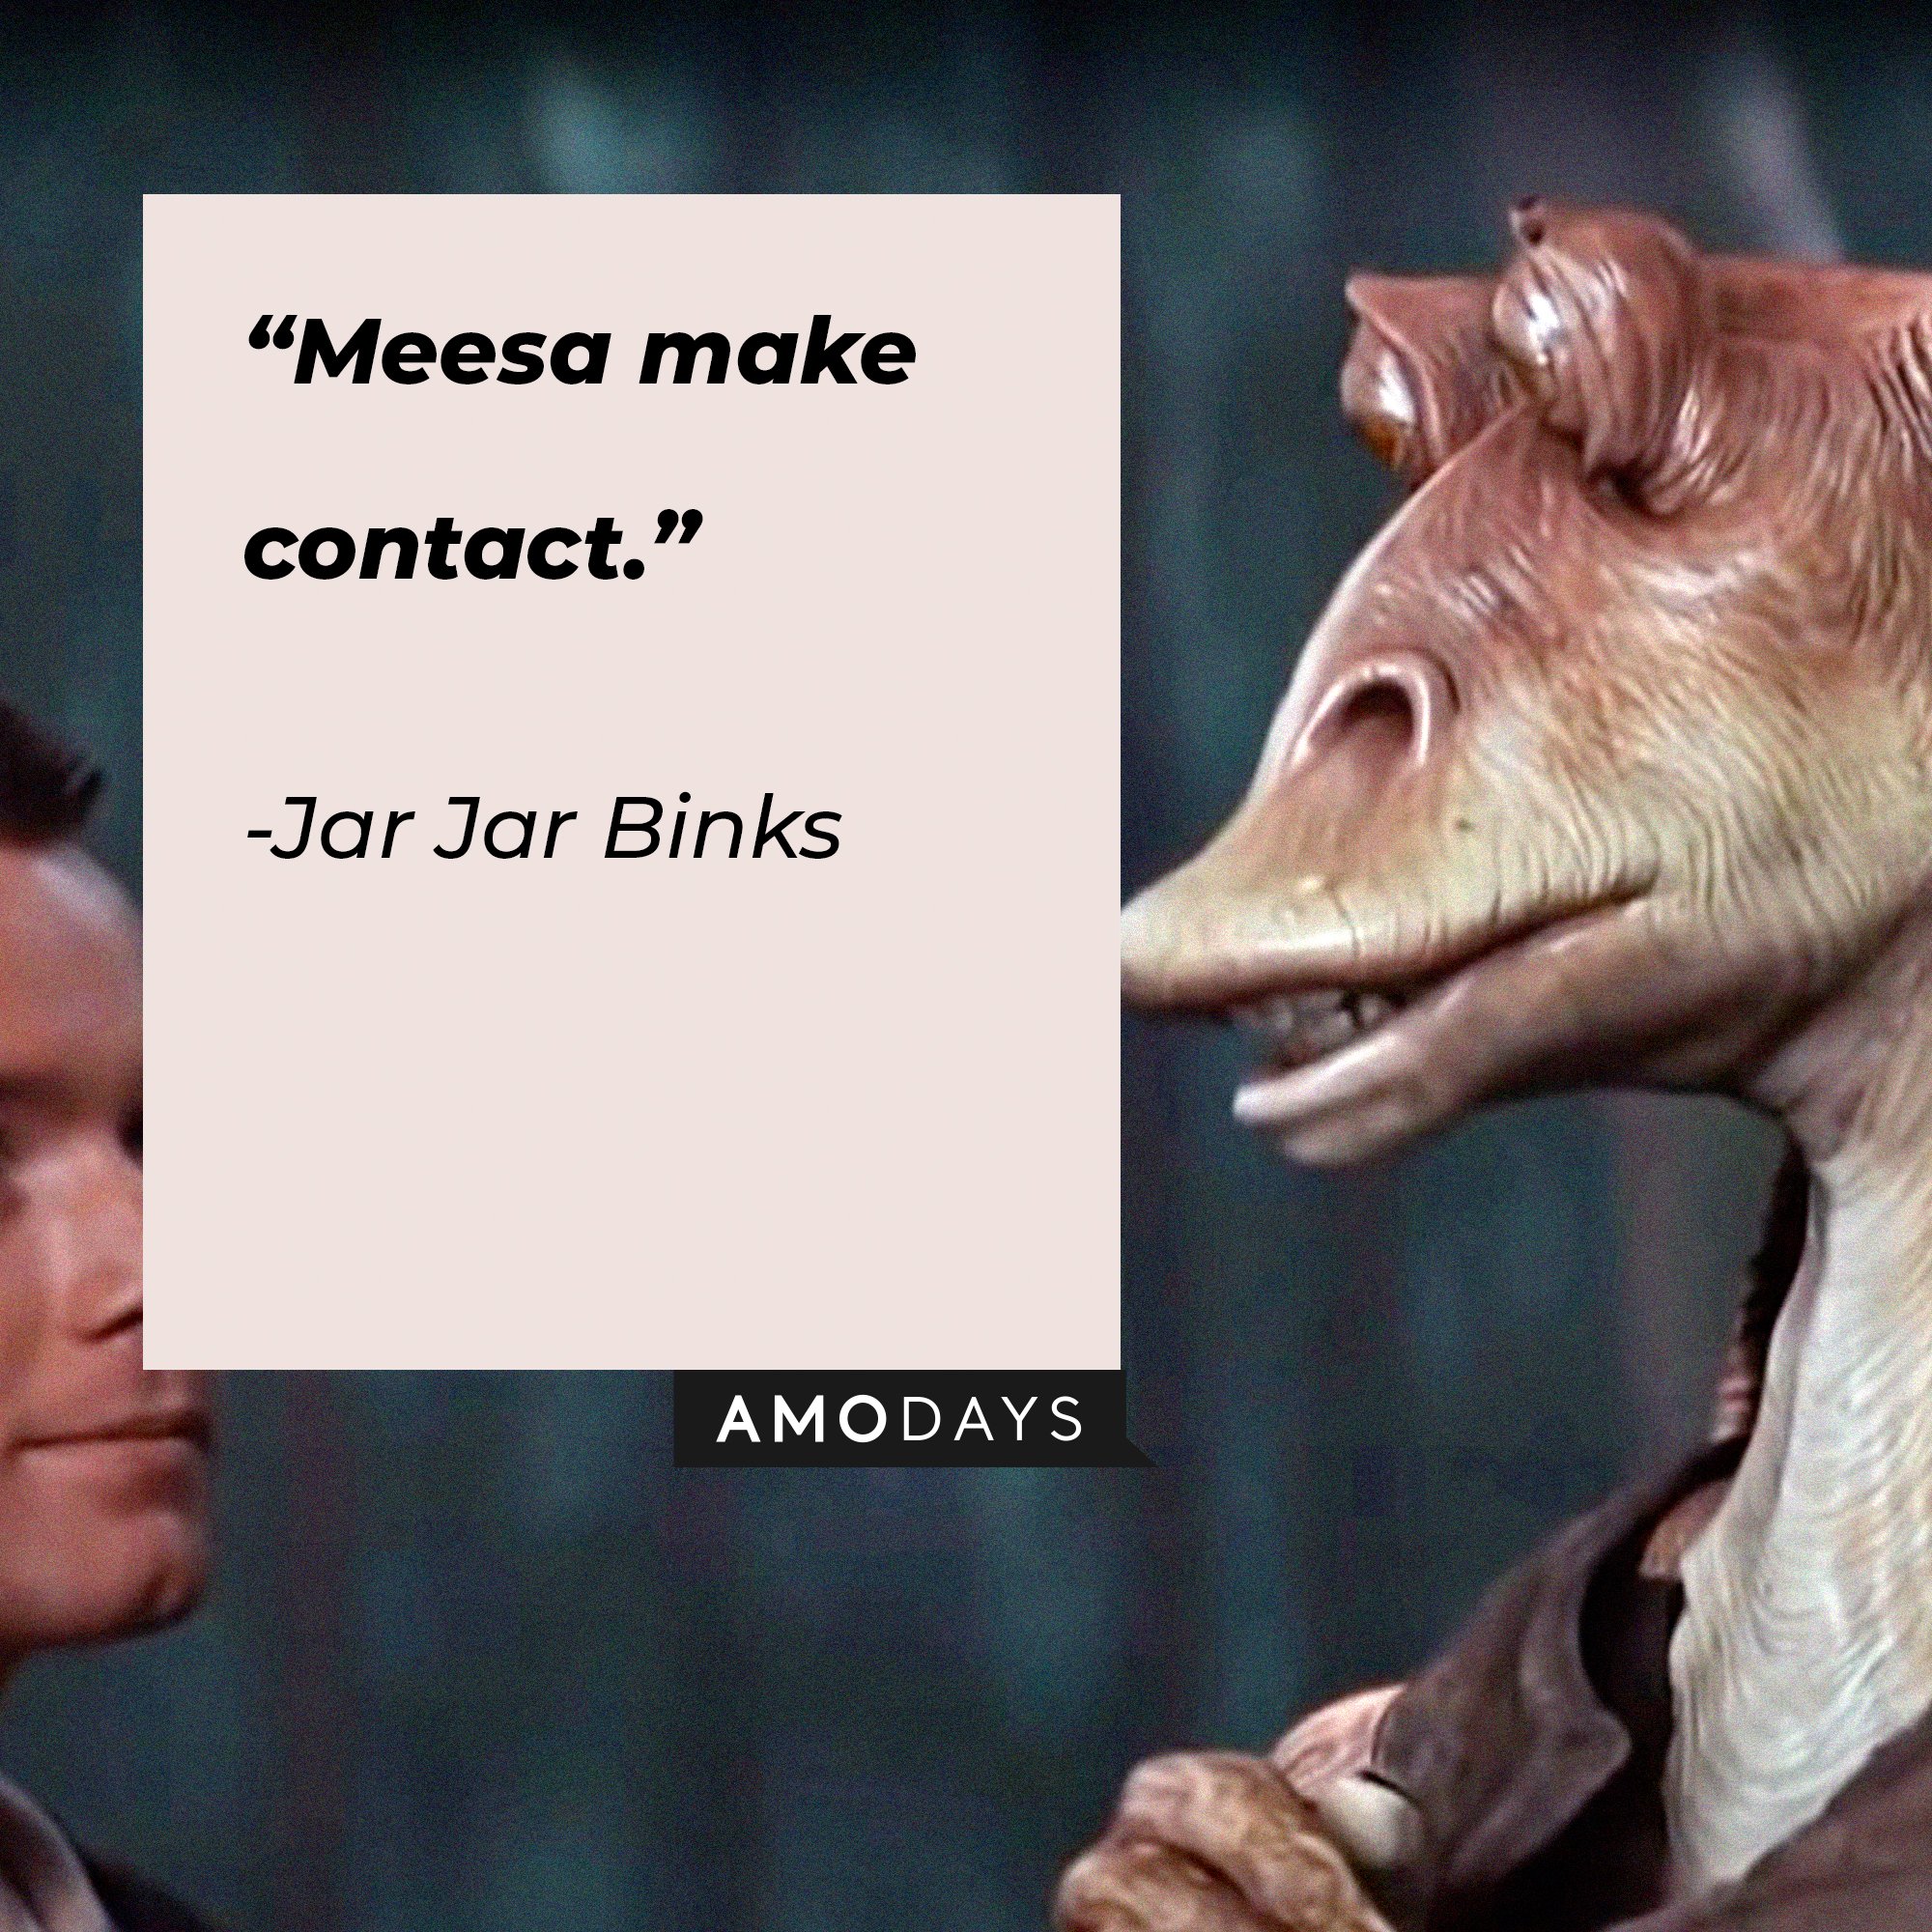  Jar Jar Binks’ quote: “Meesa make contact.”  | Image: AmoDays